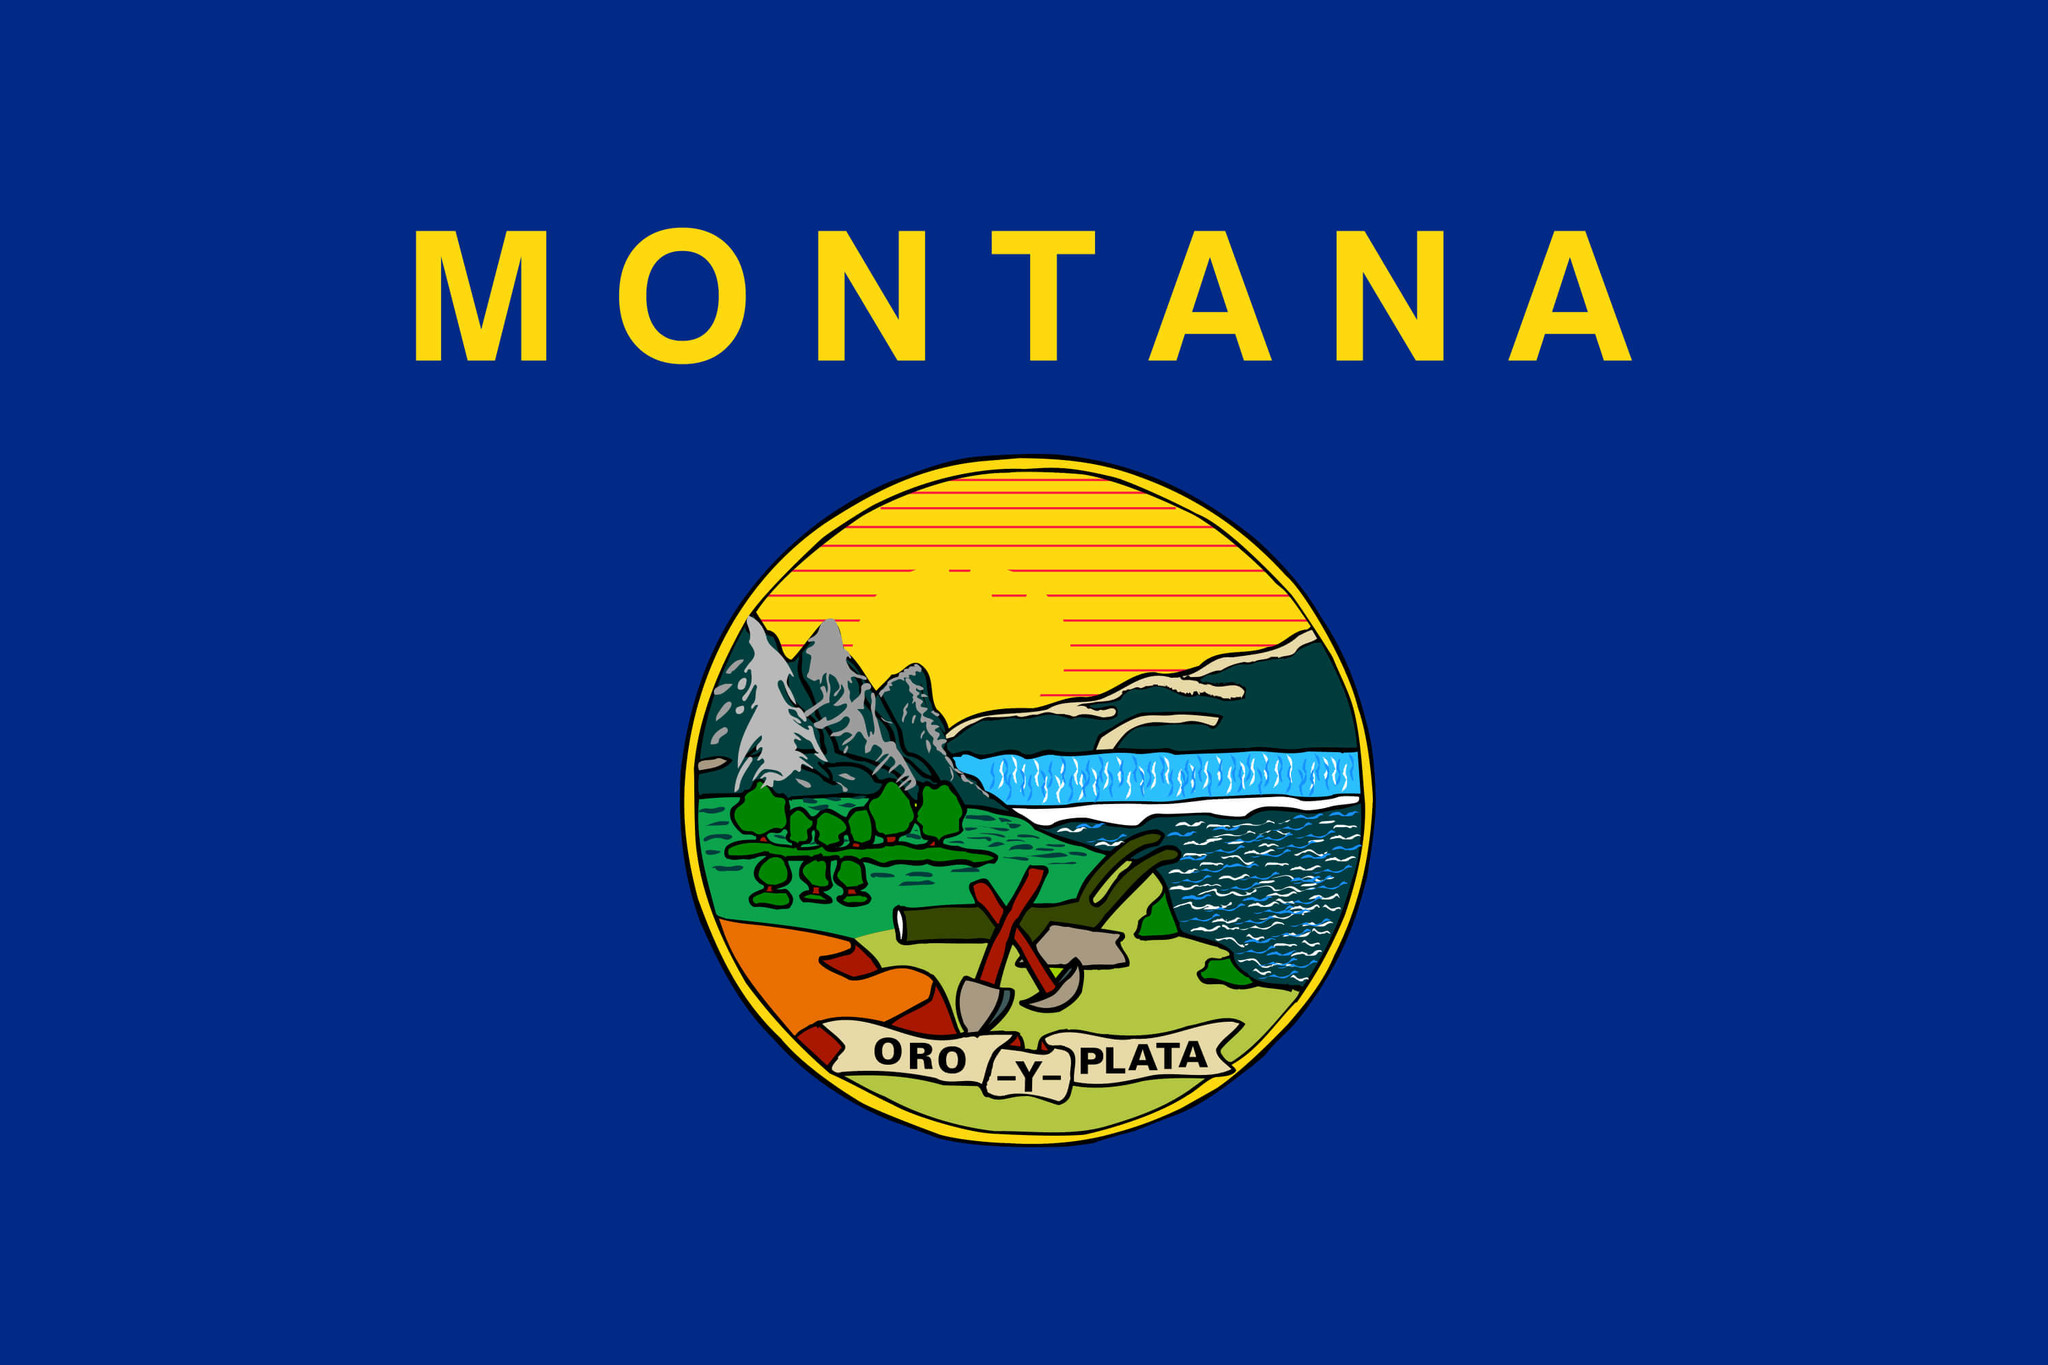 Drapeau du Montana